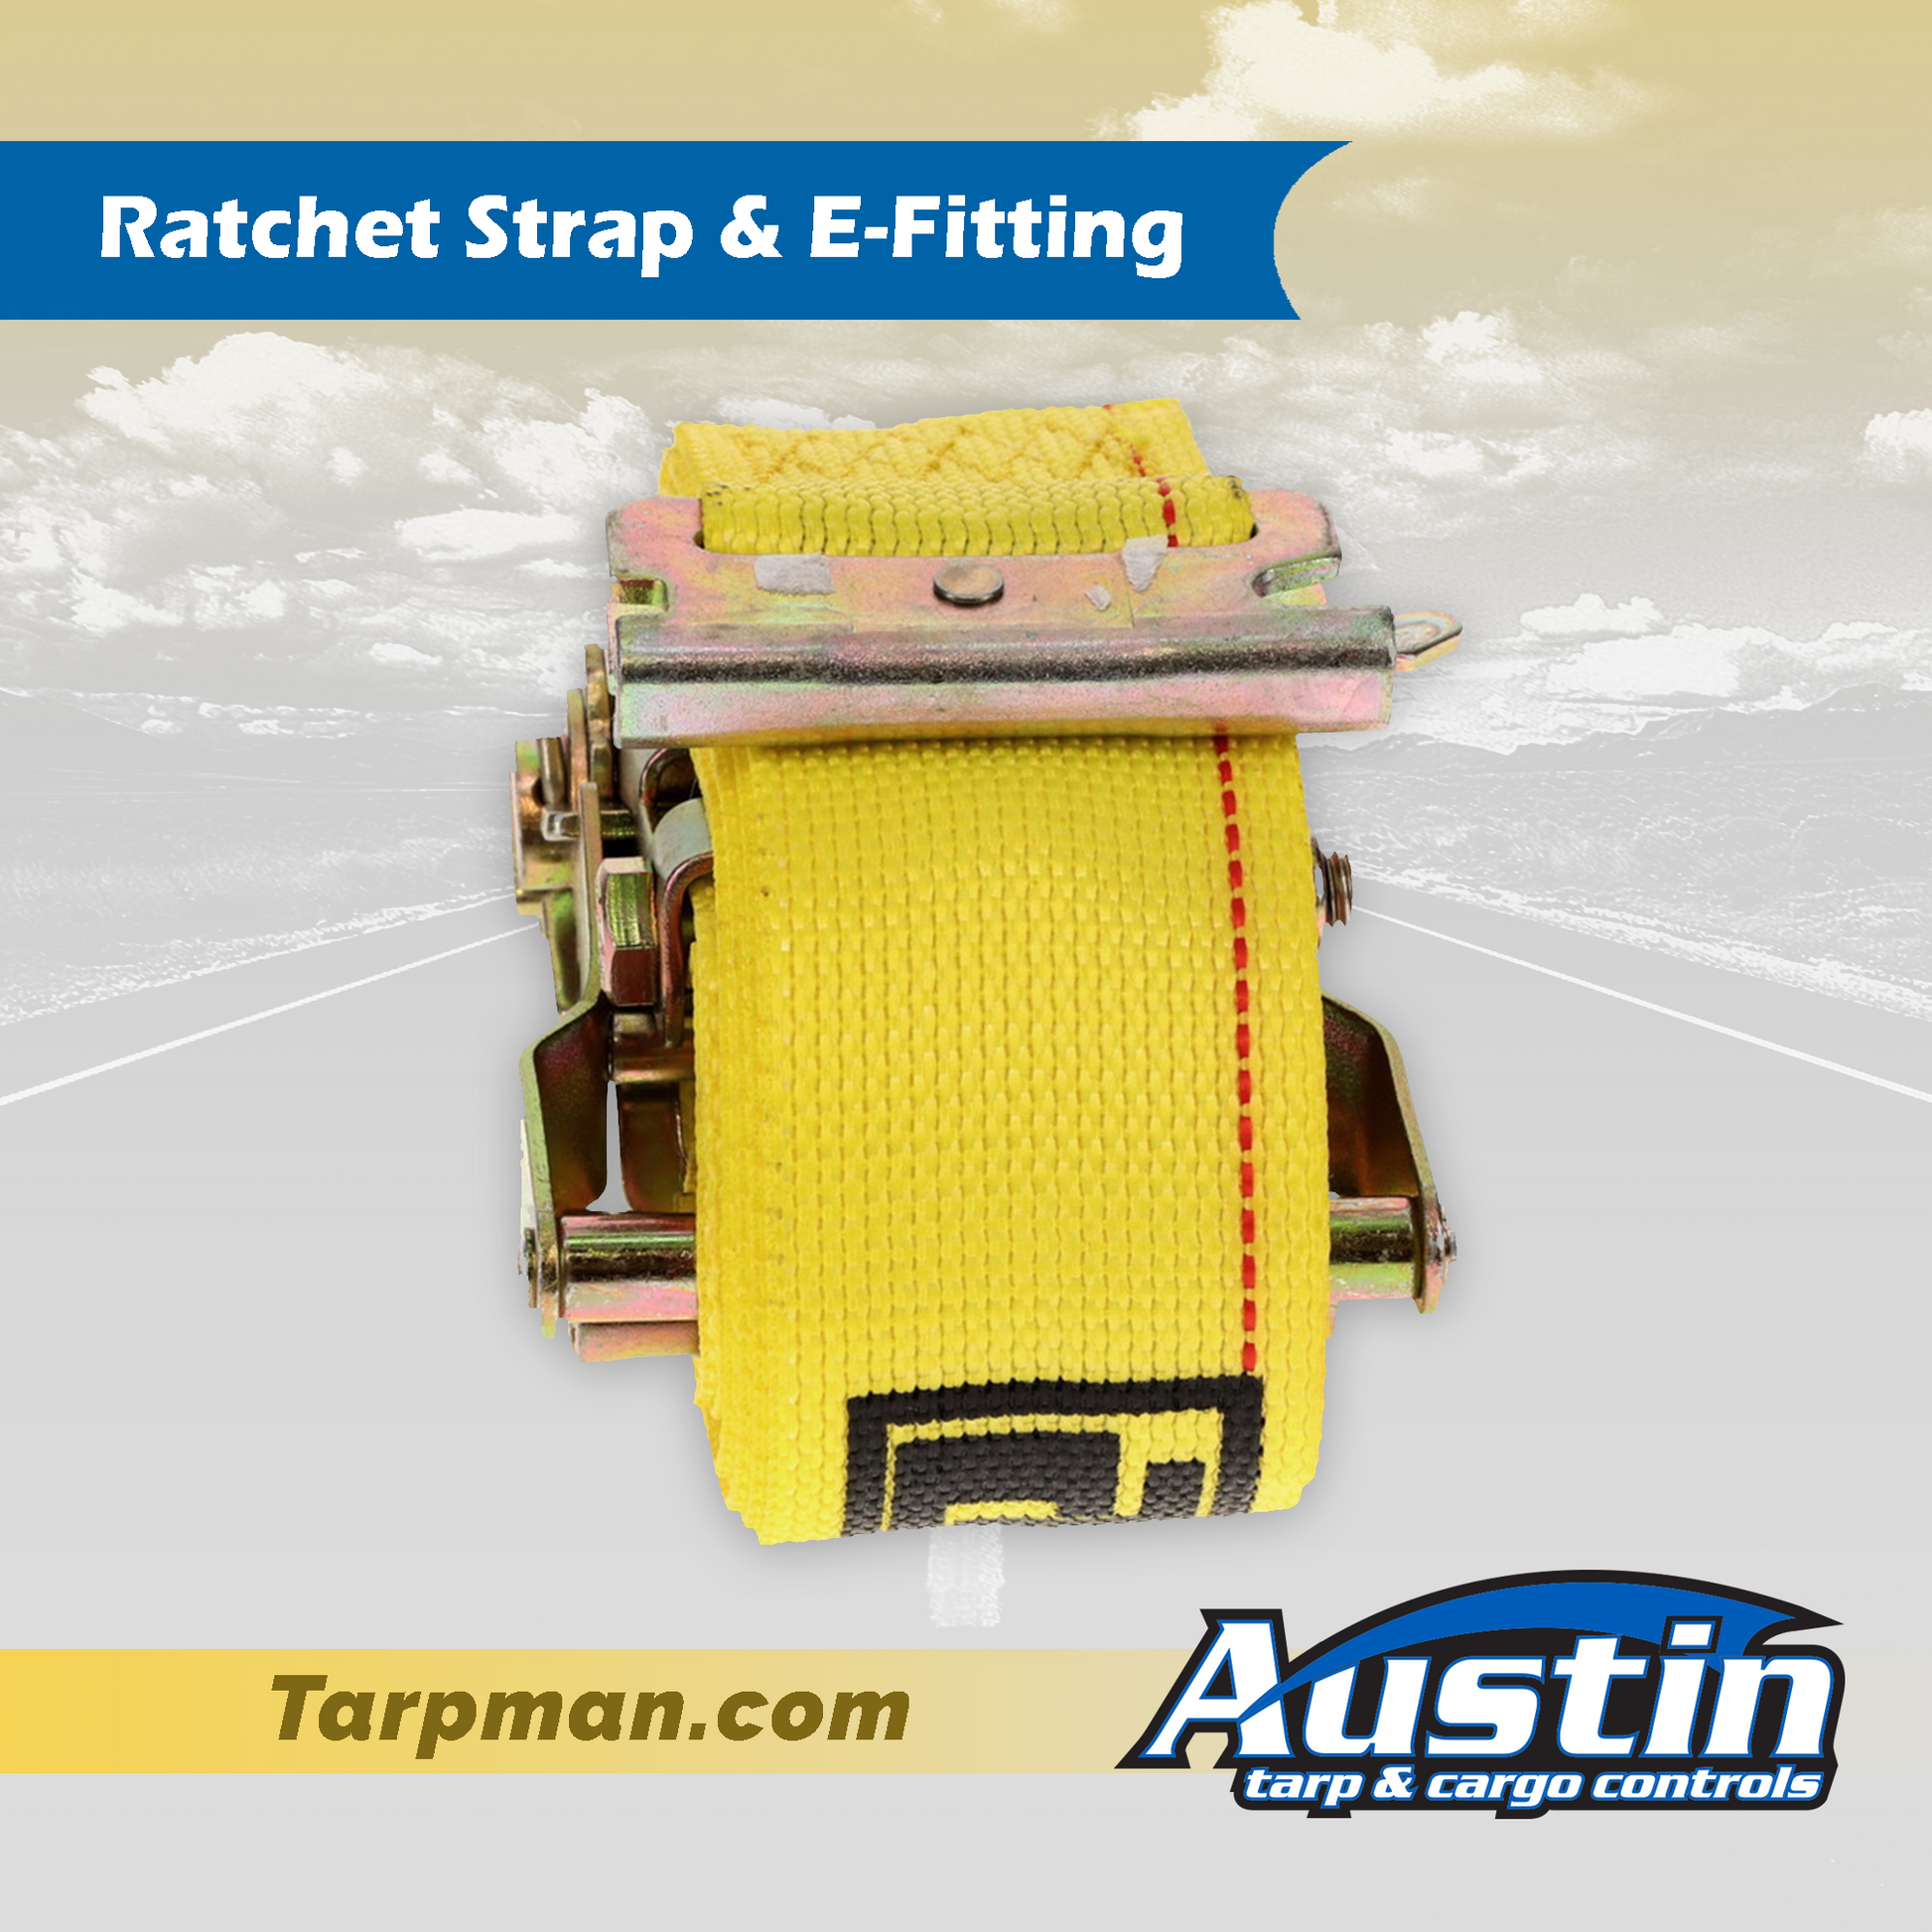 2" X 20' Ratchet Strap & E-Fitting Tarpman.com | Austin Tarp & Cargo Controls